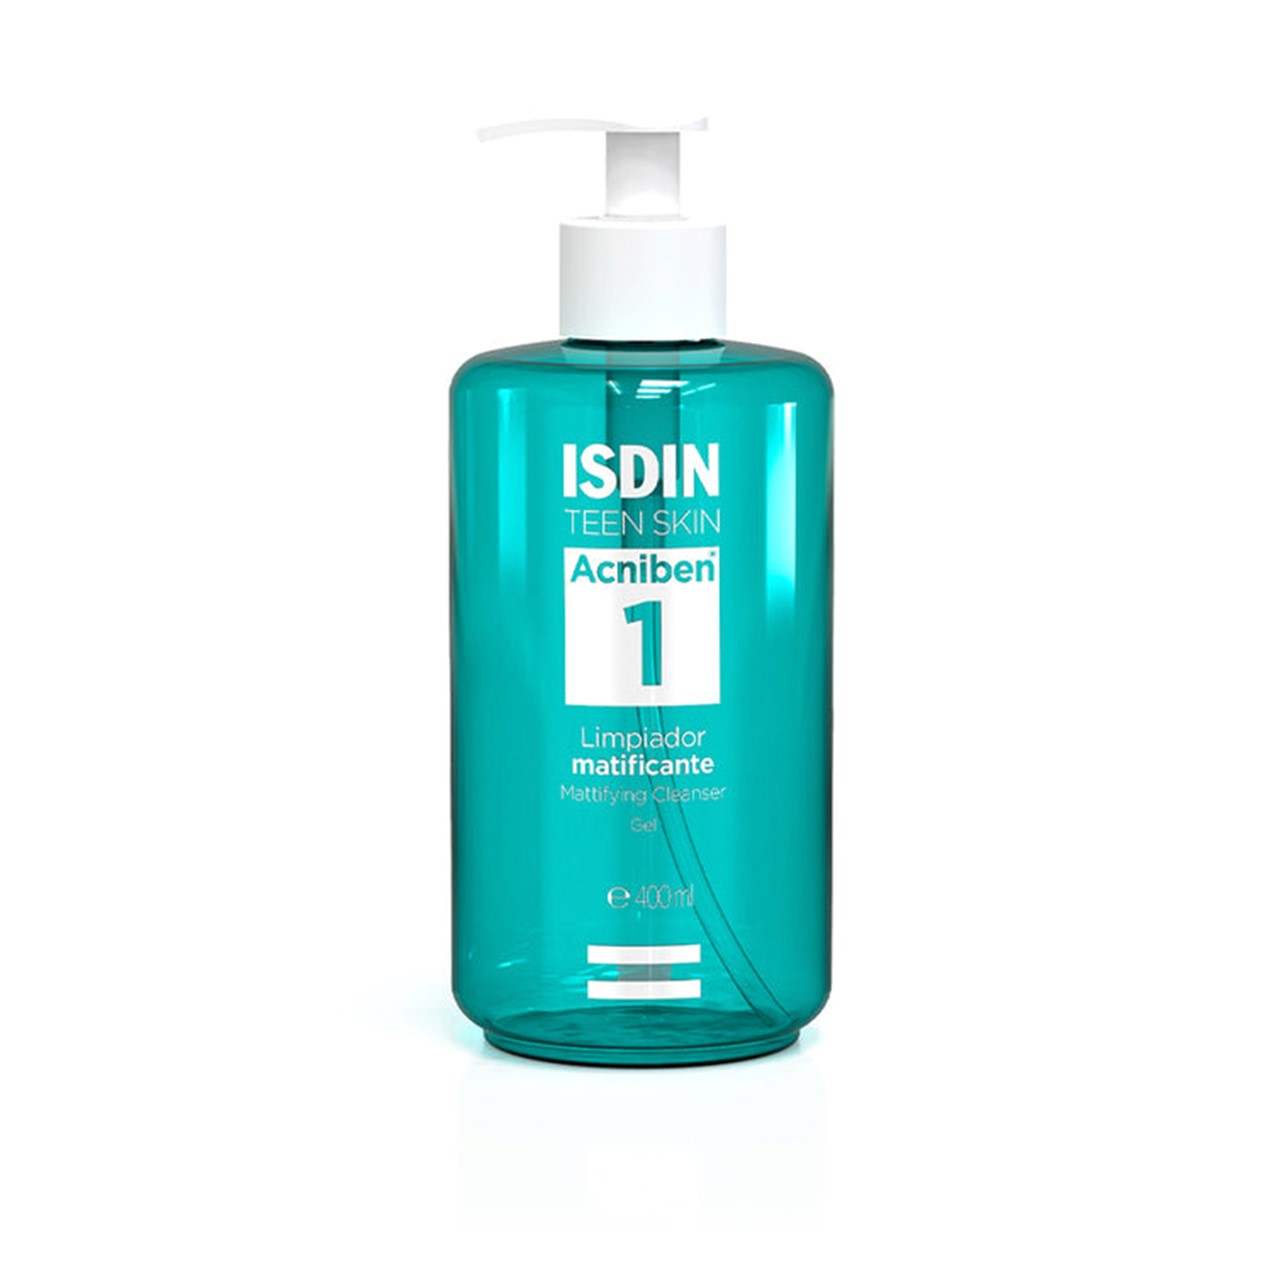 ISDIN Teen Skin Acniben 1 Mattifying Cleanser Gel 400ml (13.52 fl oz)